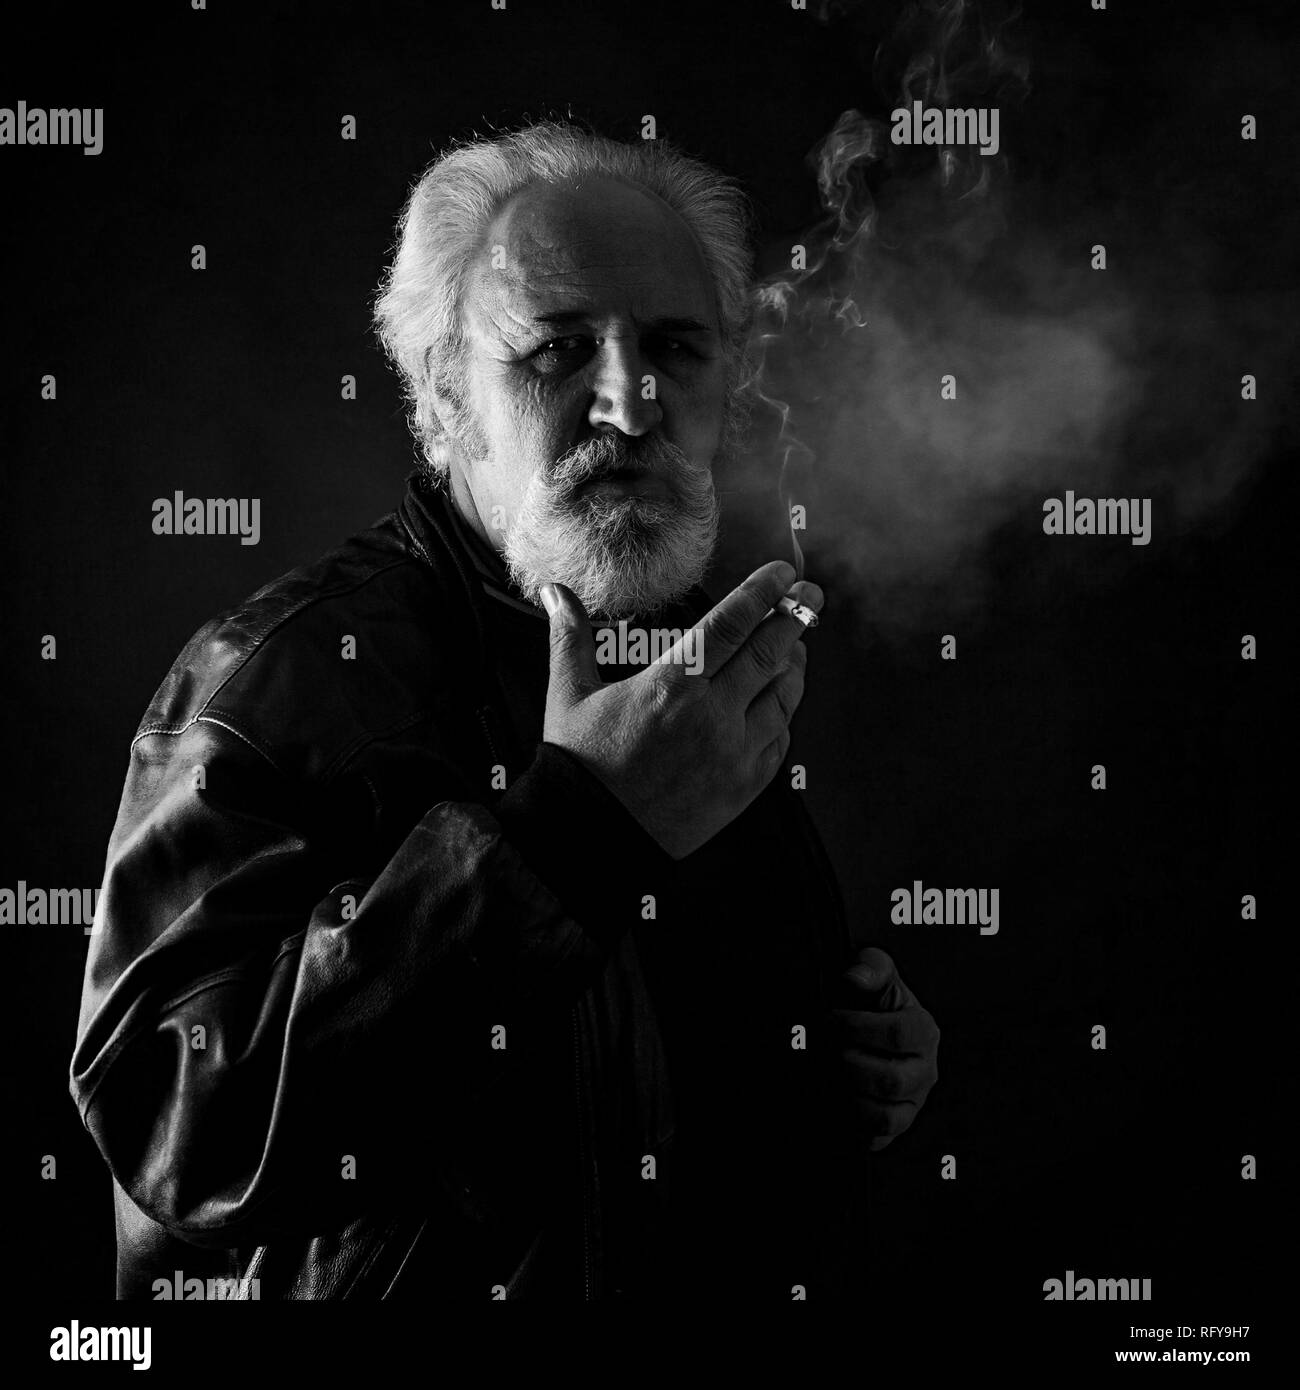 Grumpy man smoking against black background Stock Photo